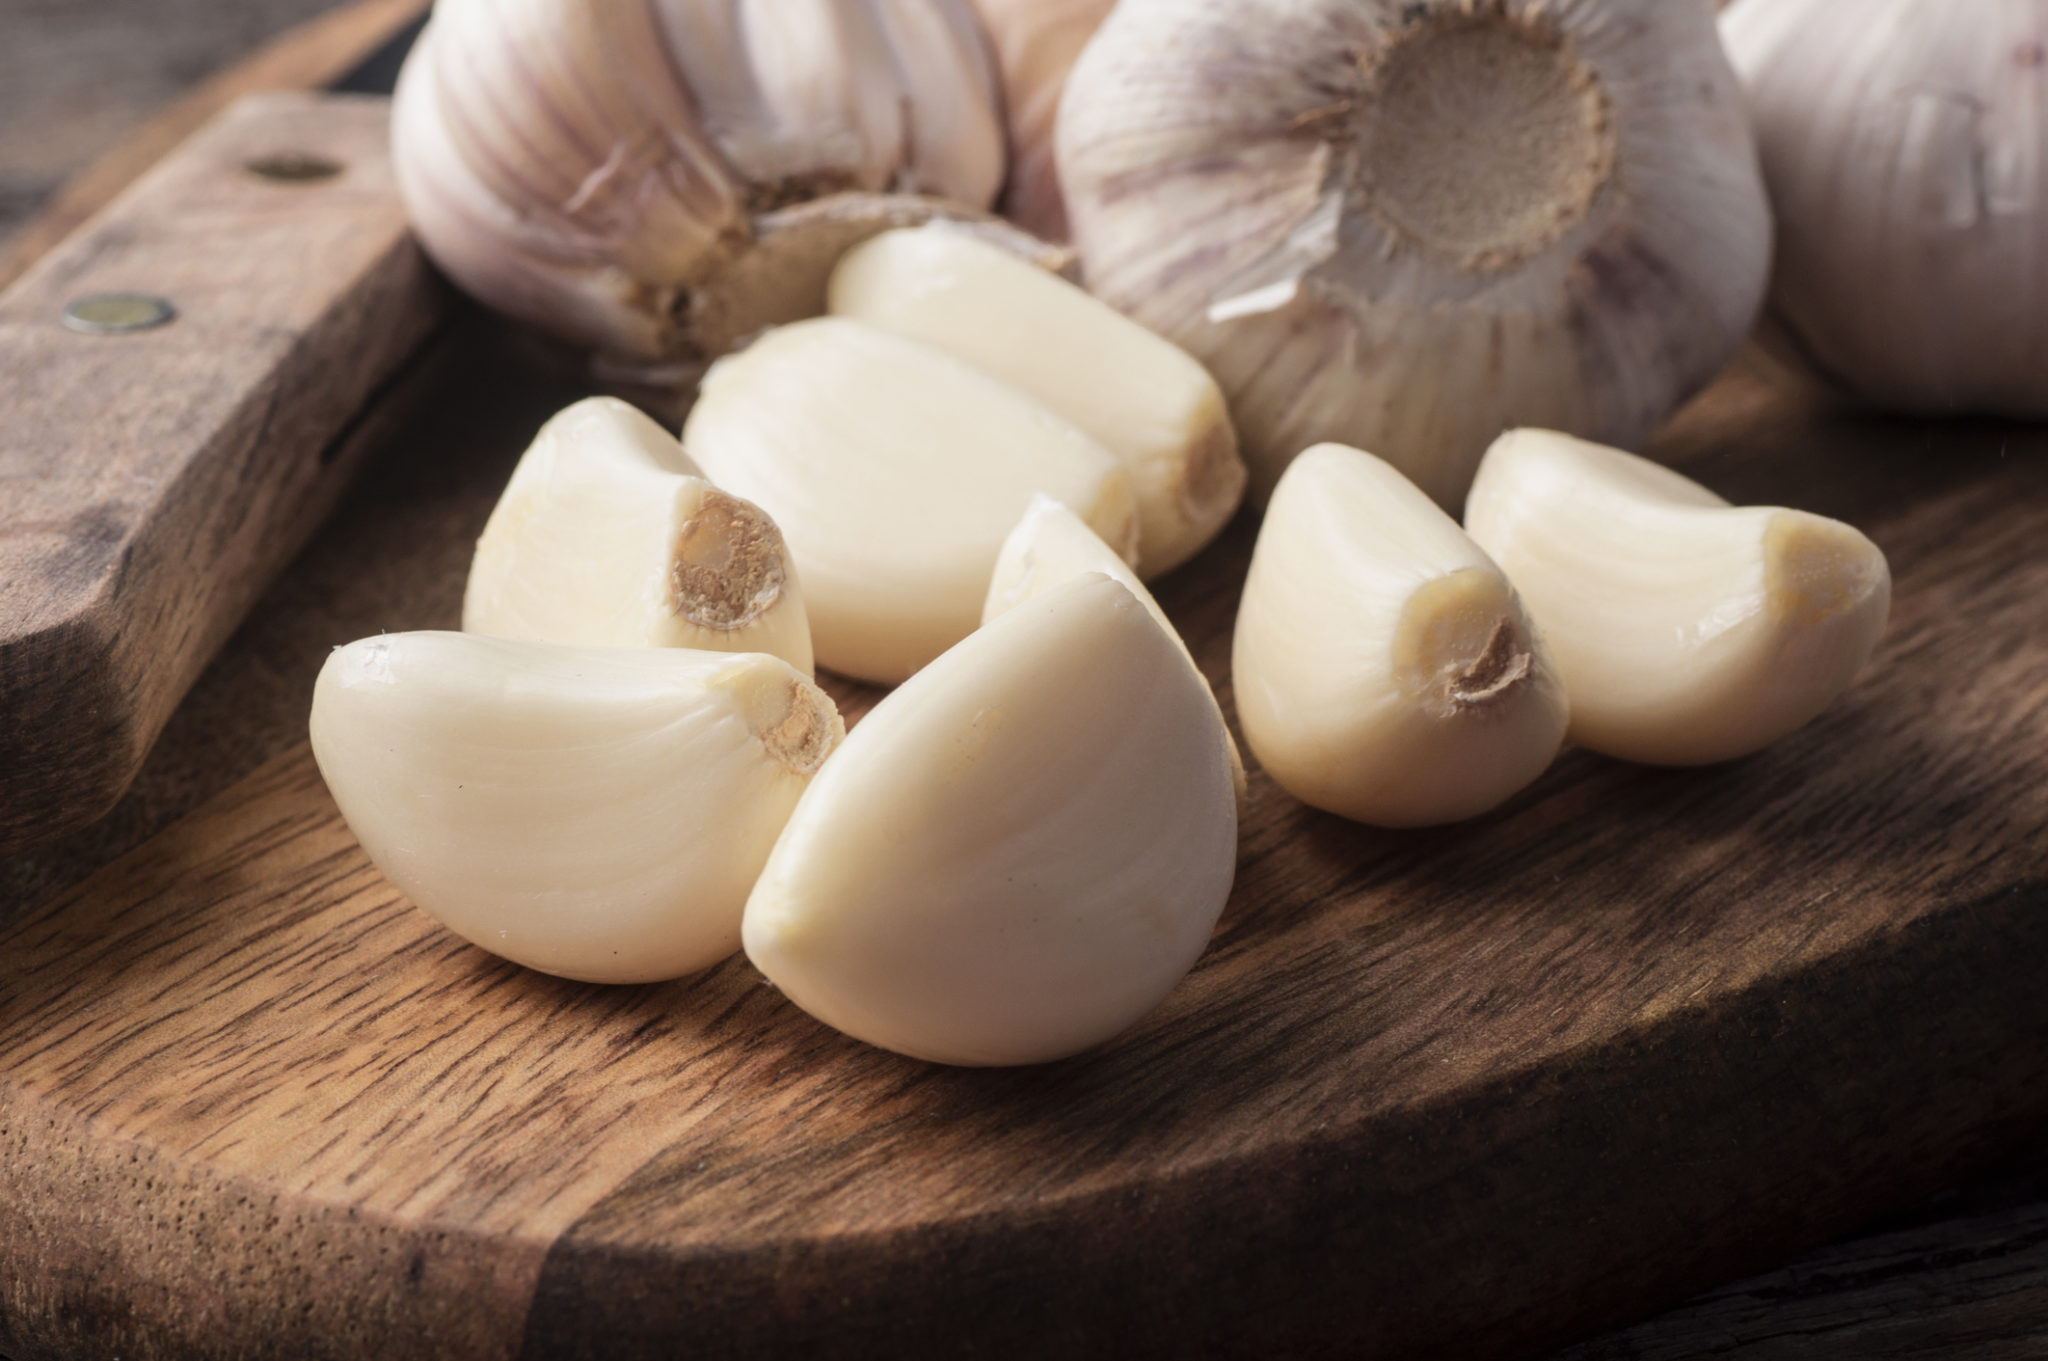 Sliced garlic on wood background.